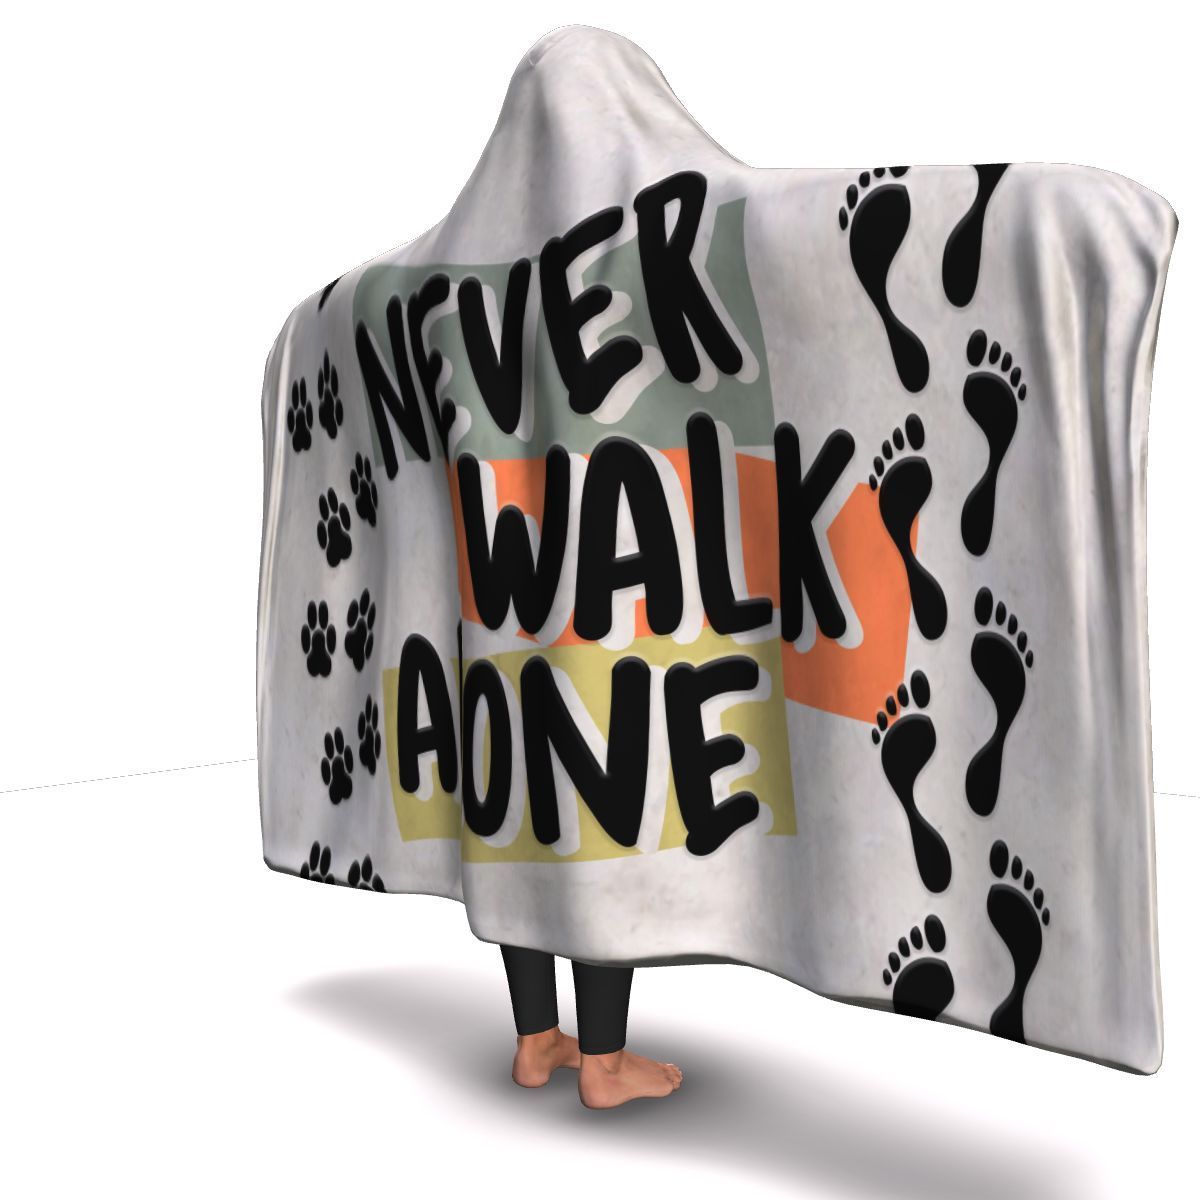 Never Walk Alone - Hooded Blanket.